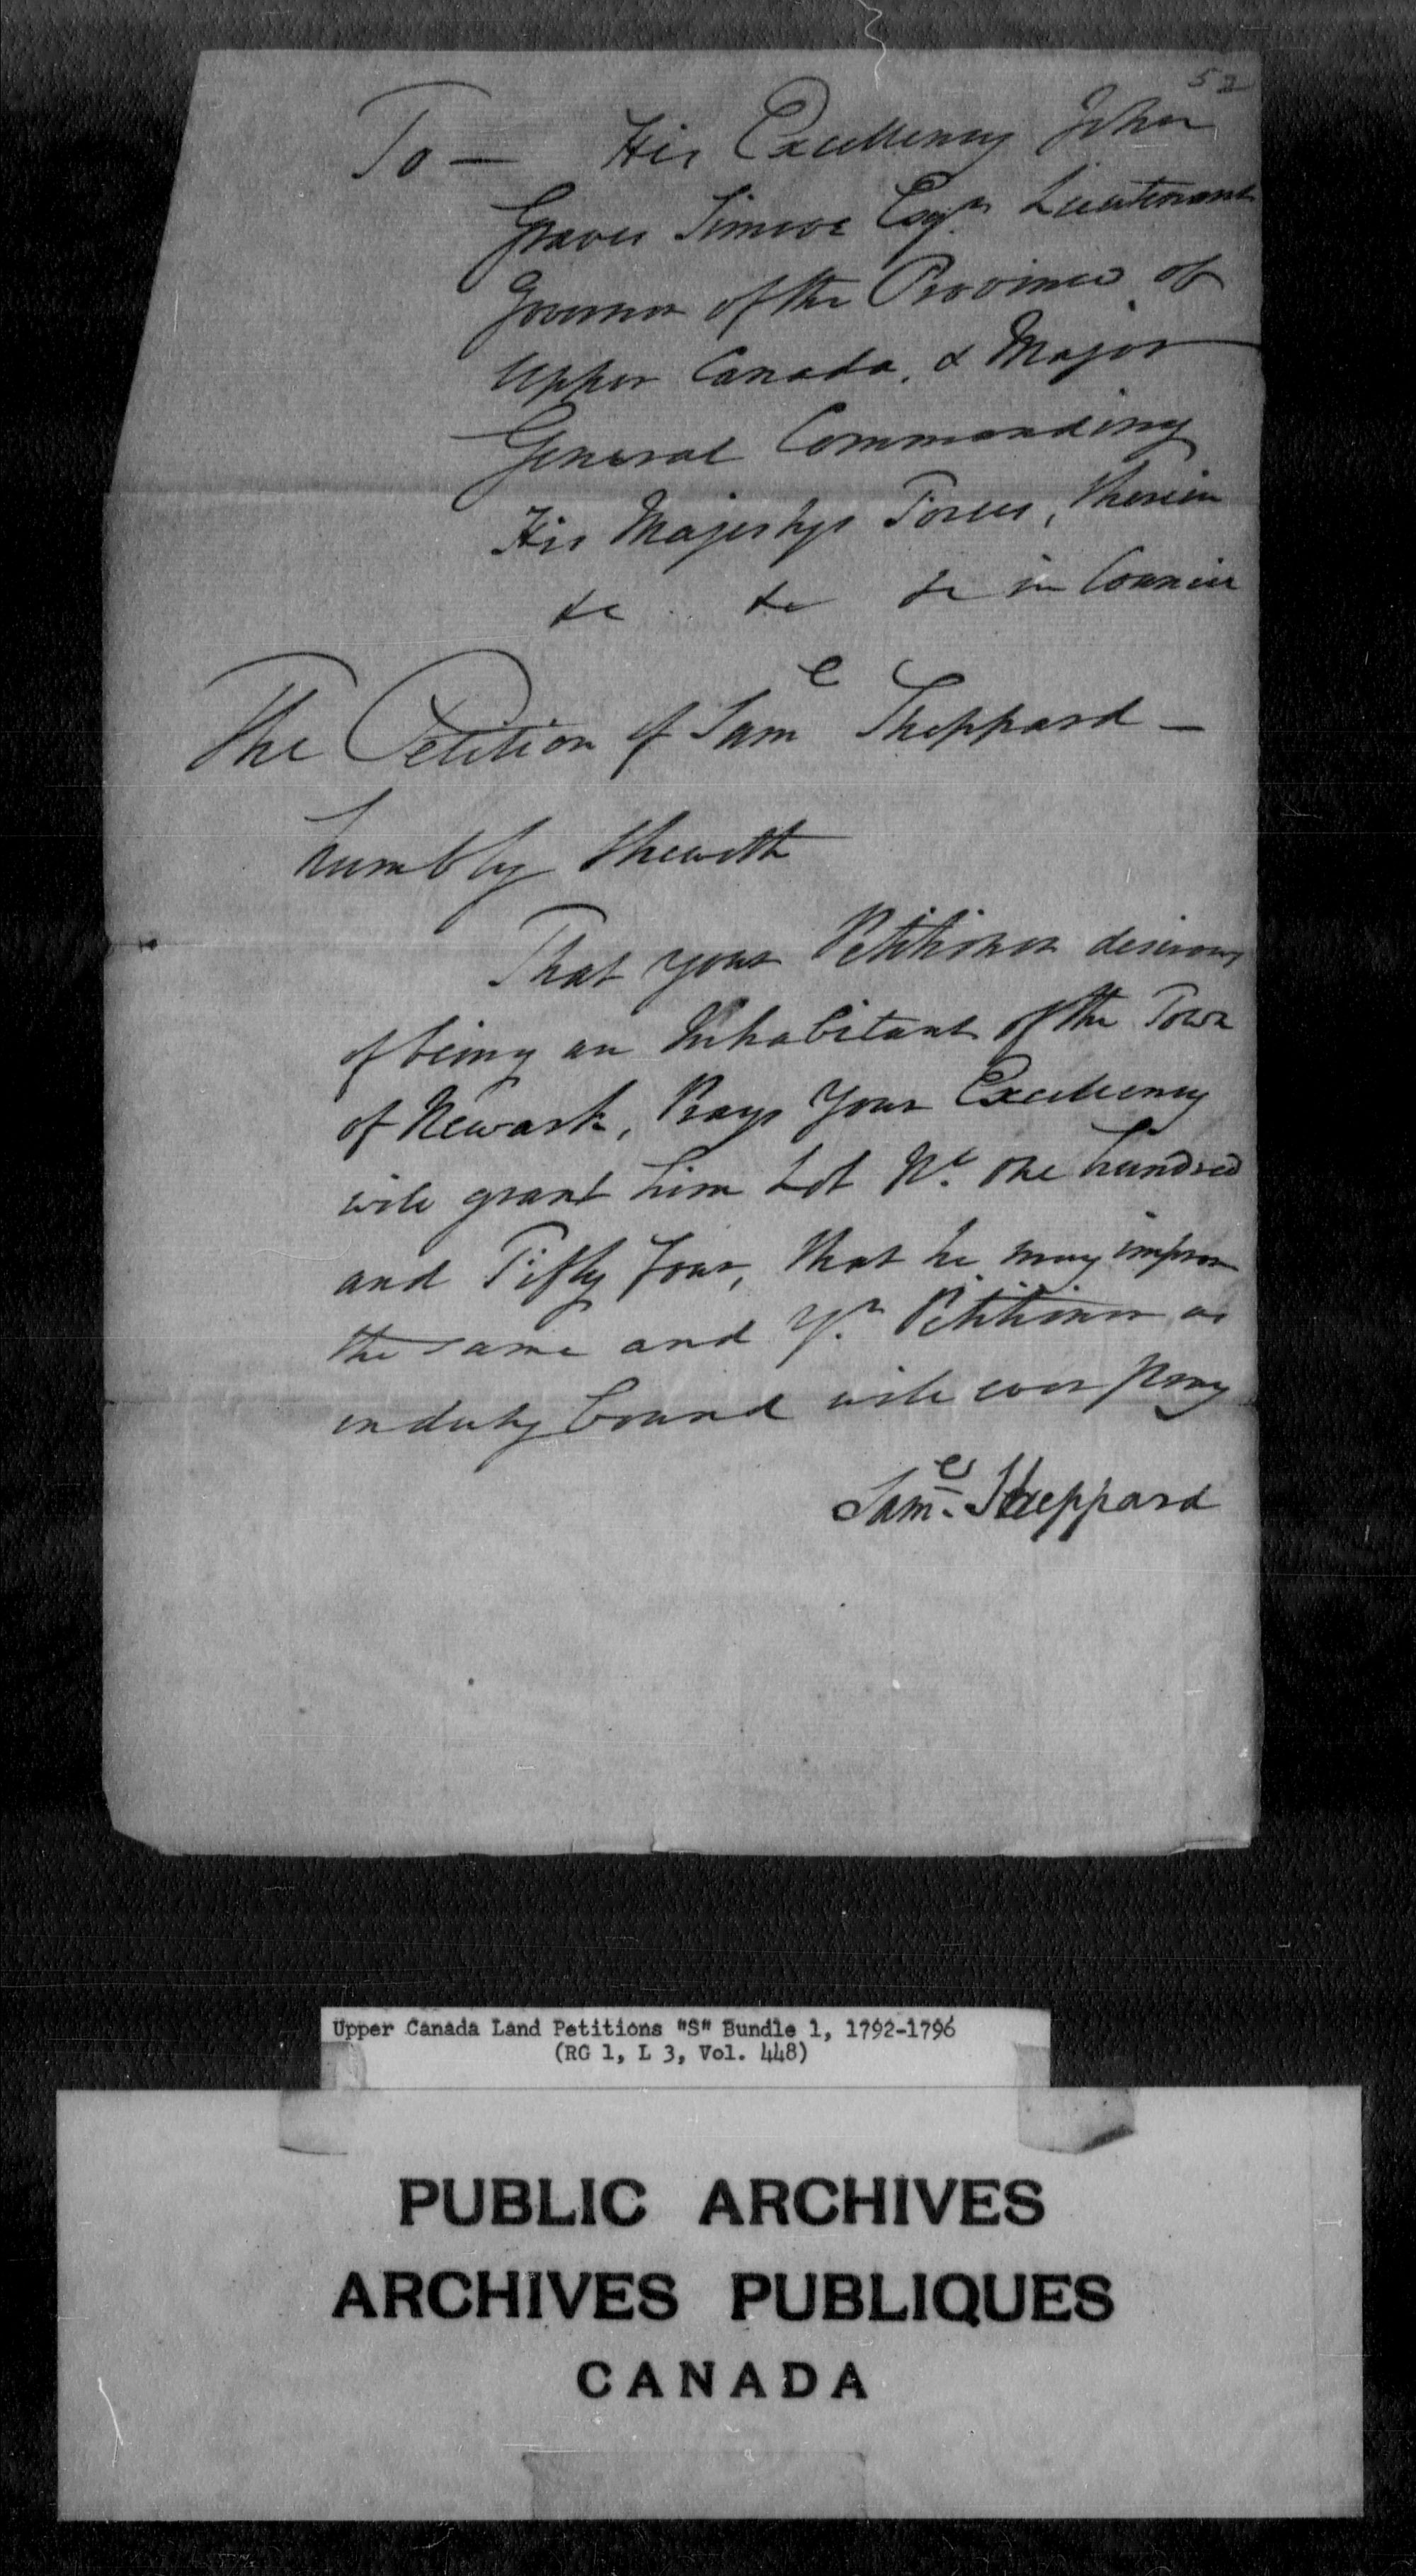 Titre : Demandes de terres du Haut-Canada (1763-1865) - N d'enregistrement Mikan : 205131 - Microforme : c-2806